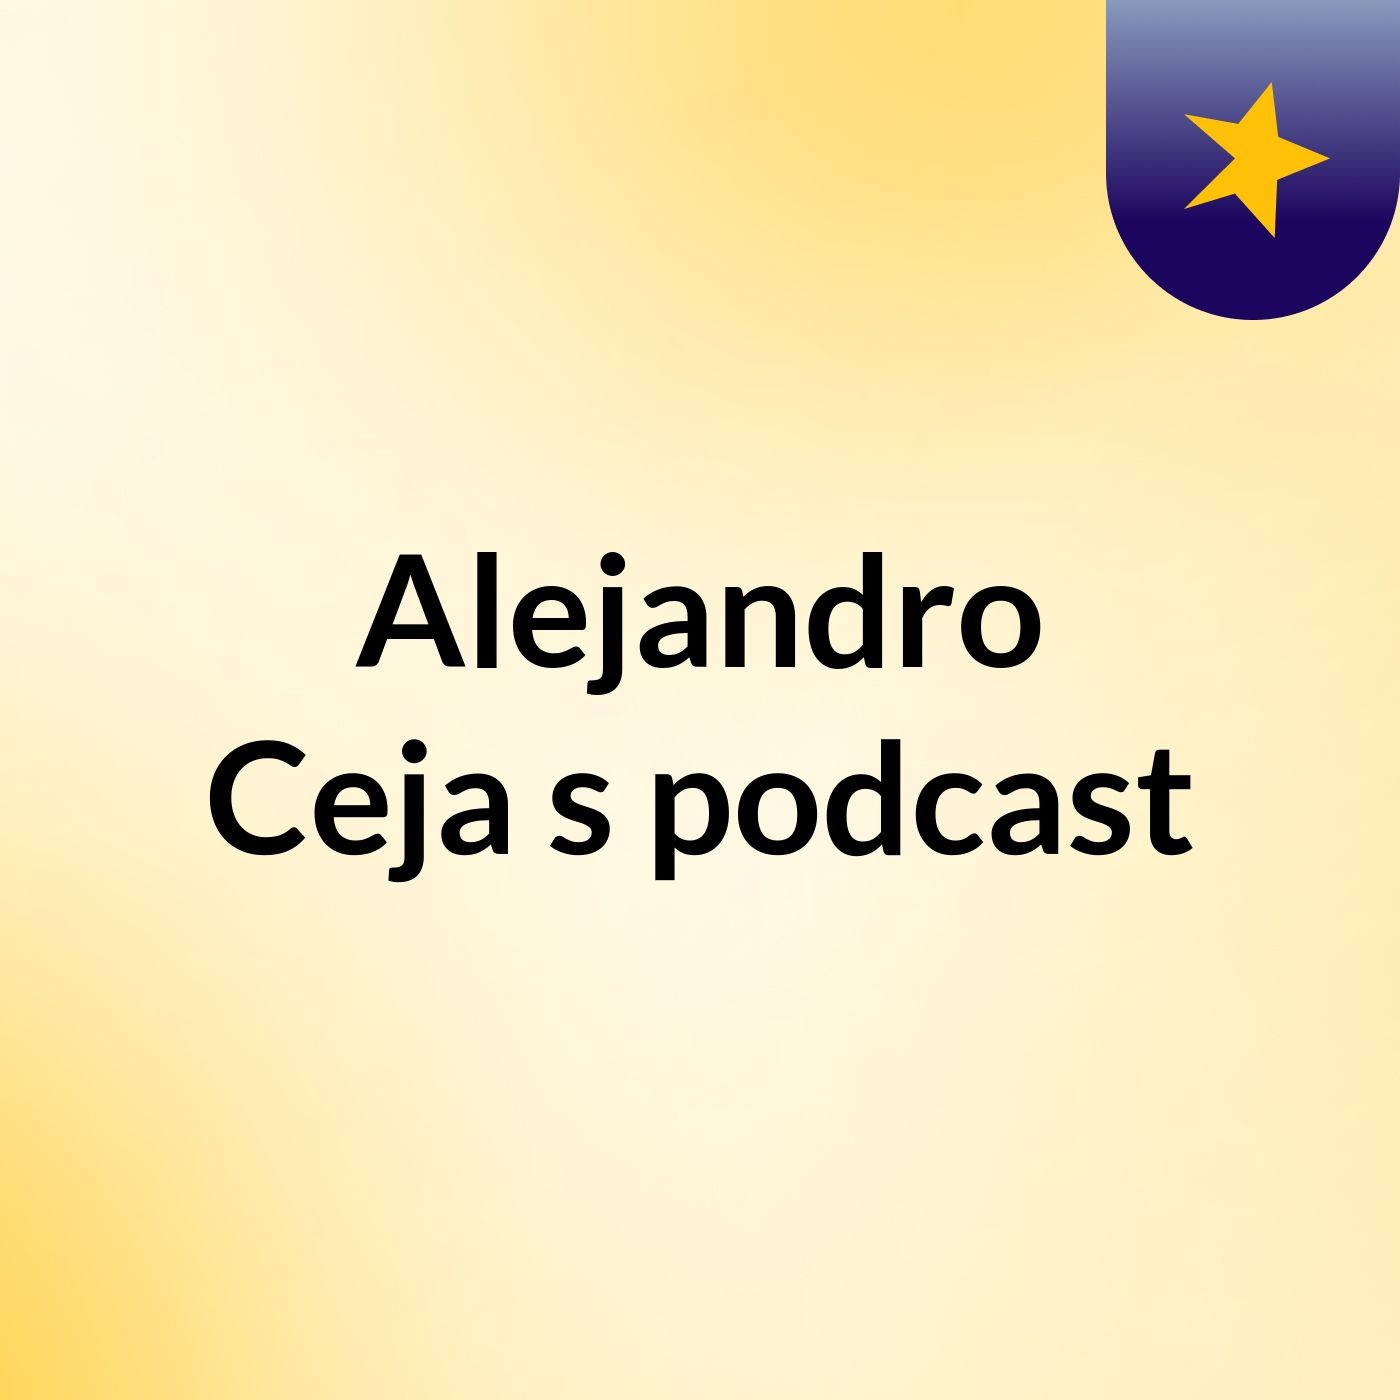 Alejandro Ceja's podcast